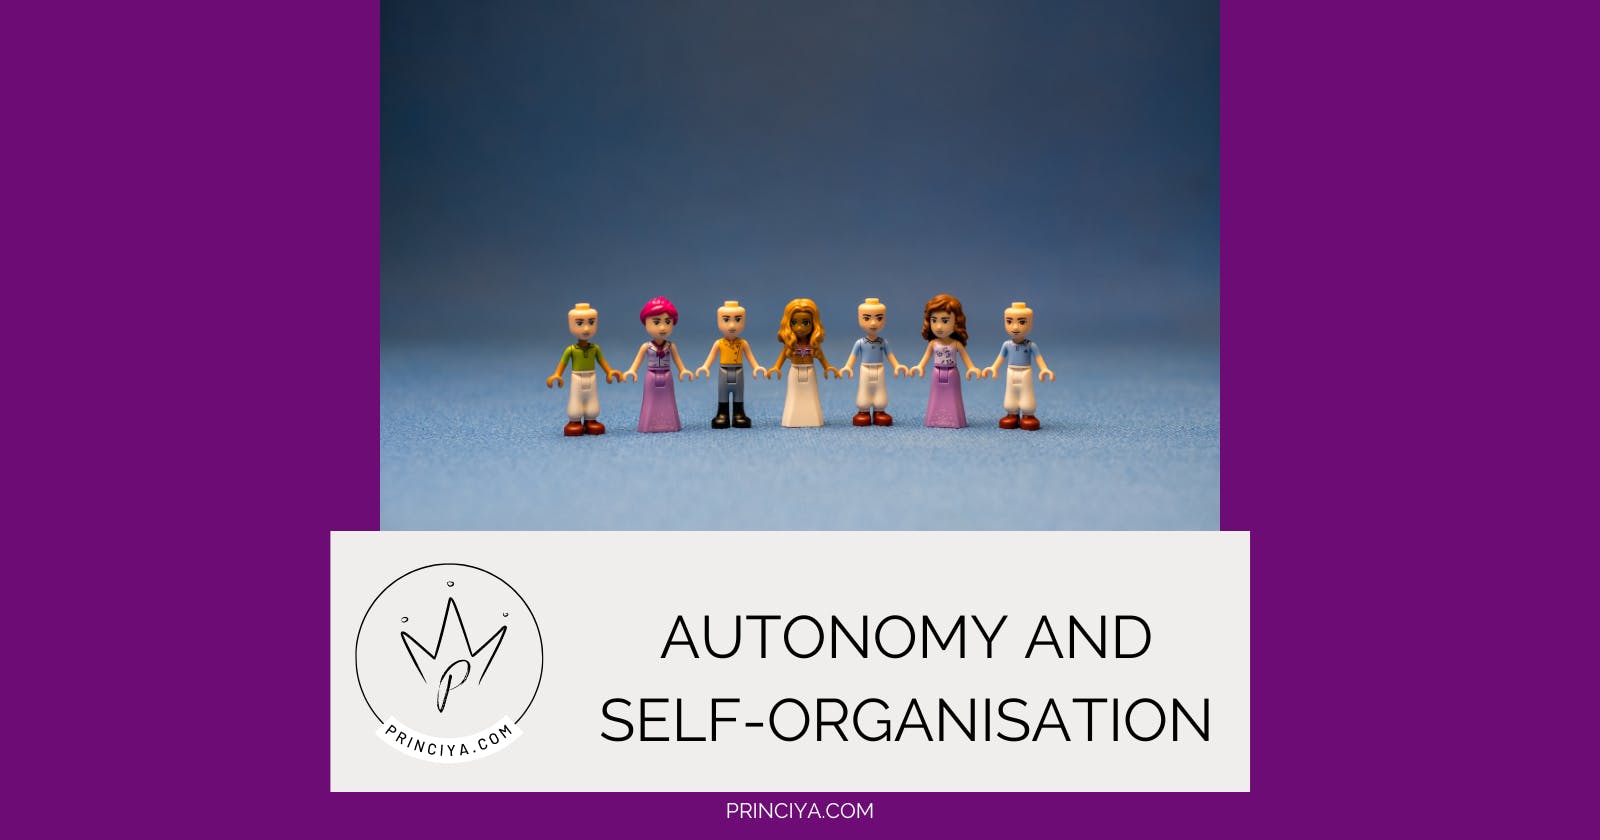 Autonomy and self-organisation